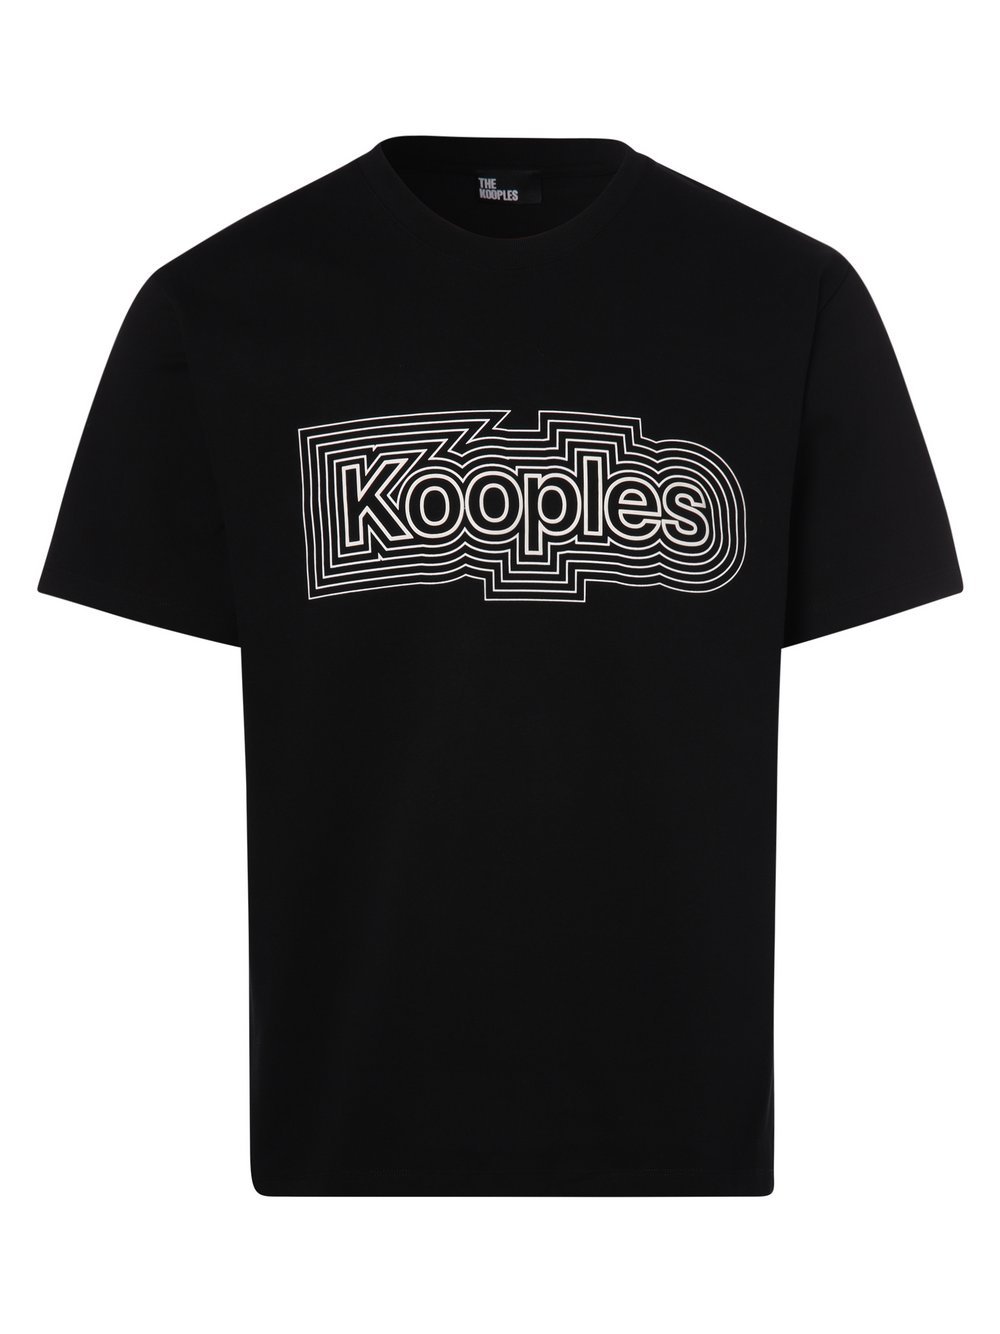 The Kooples - T-shirt męski, czarny